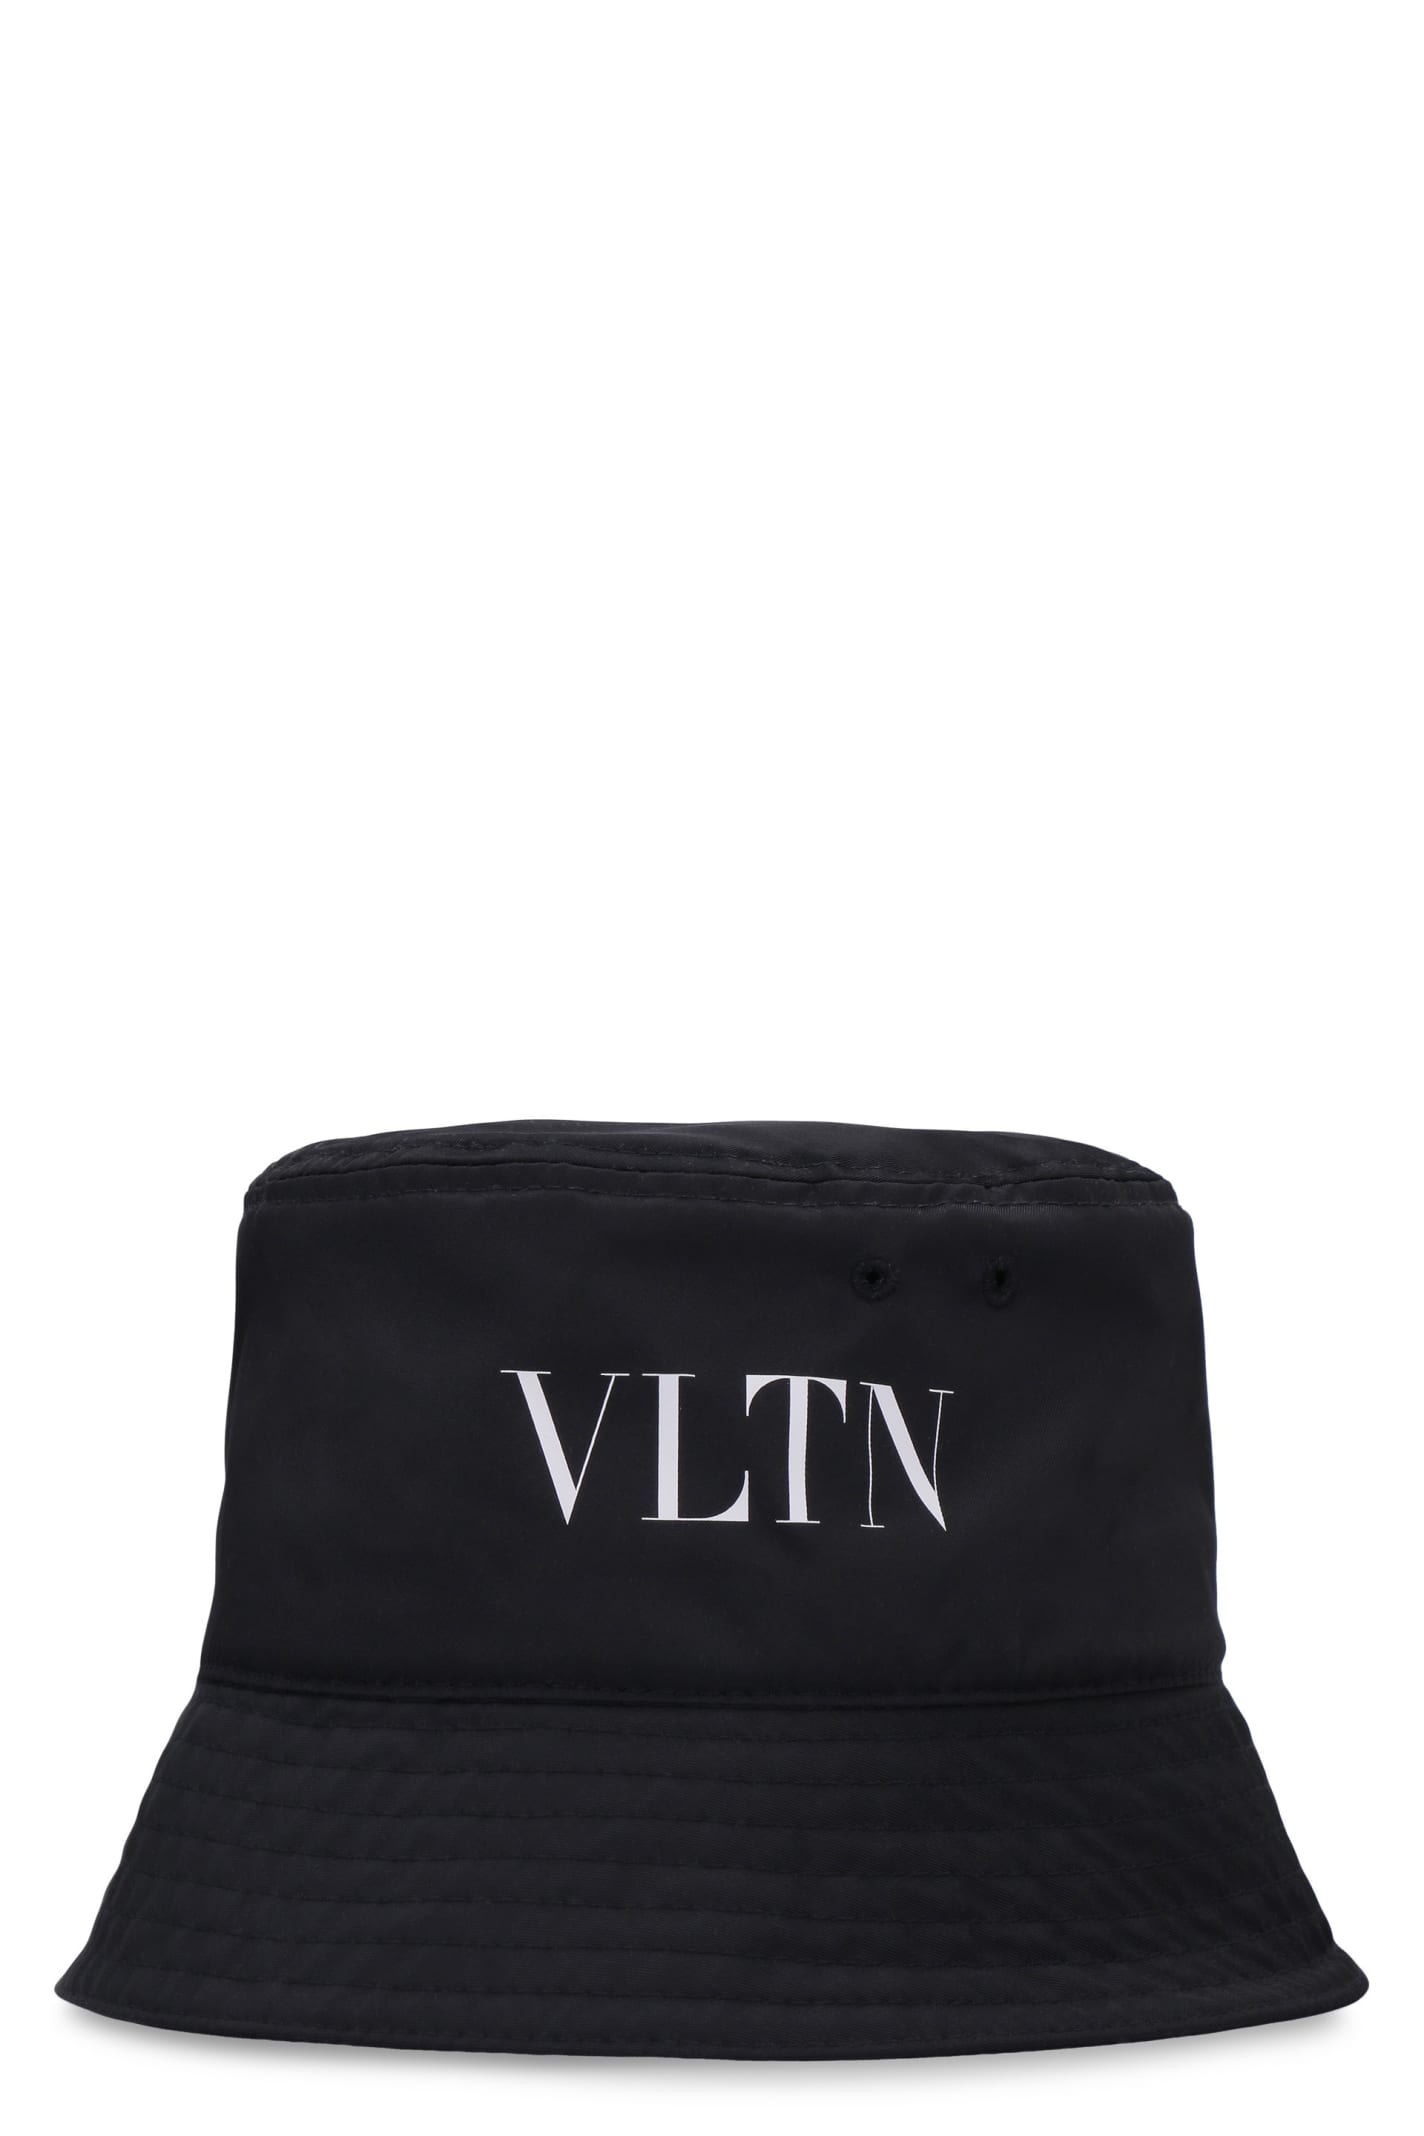 Valentino Garavani Garavani - Vltn Bucket Hat